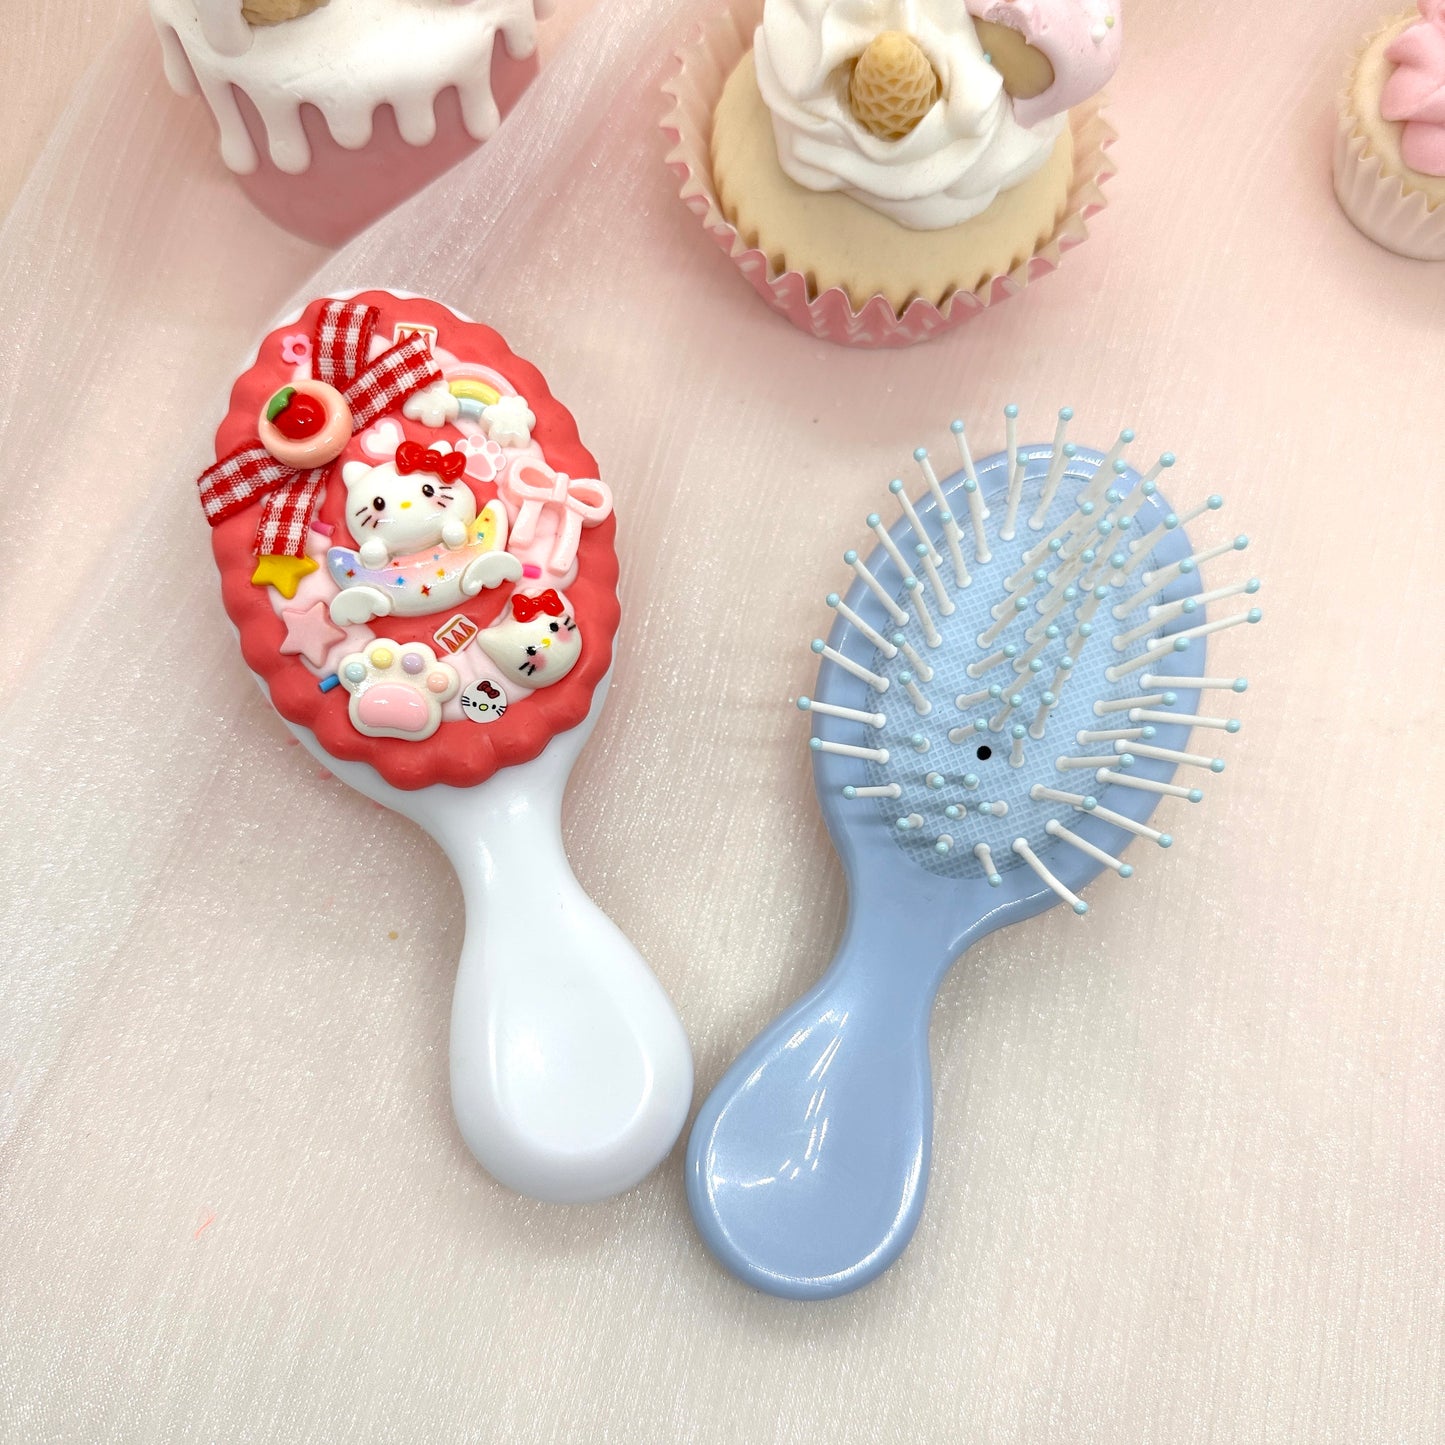 Kawaii Hello Kitty hair brush, Handmade Decoden Hair Brushes, Cream Clay Hair Brushes, Hair Accessories